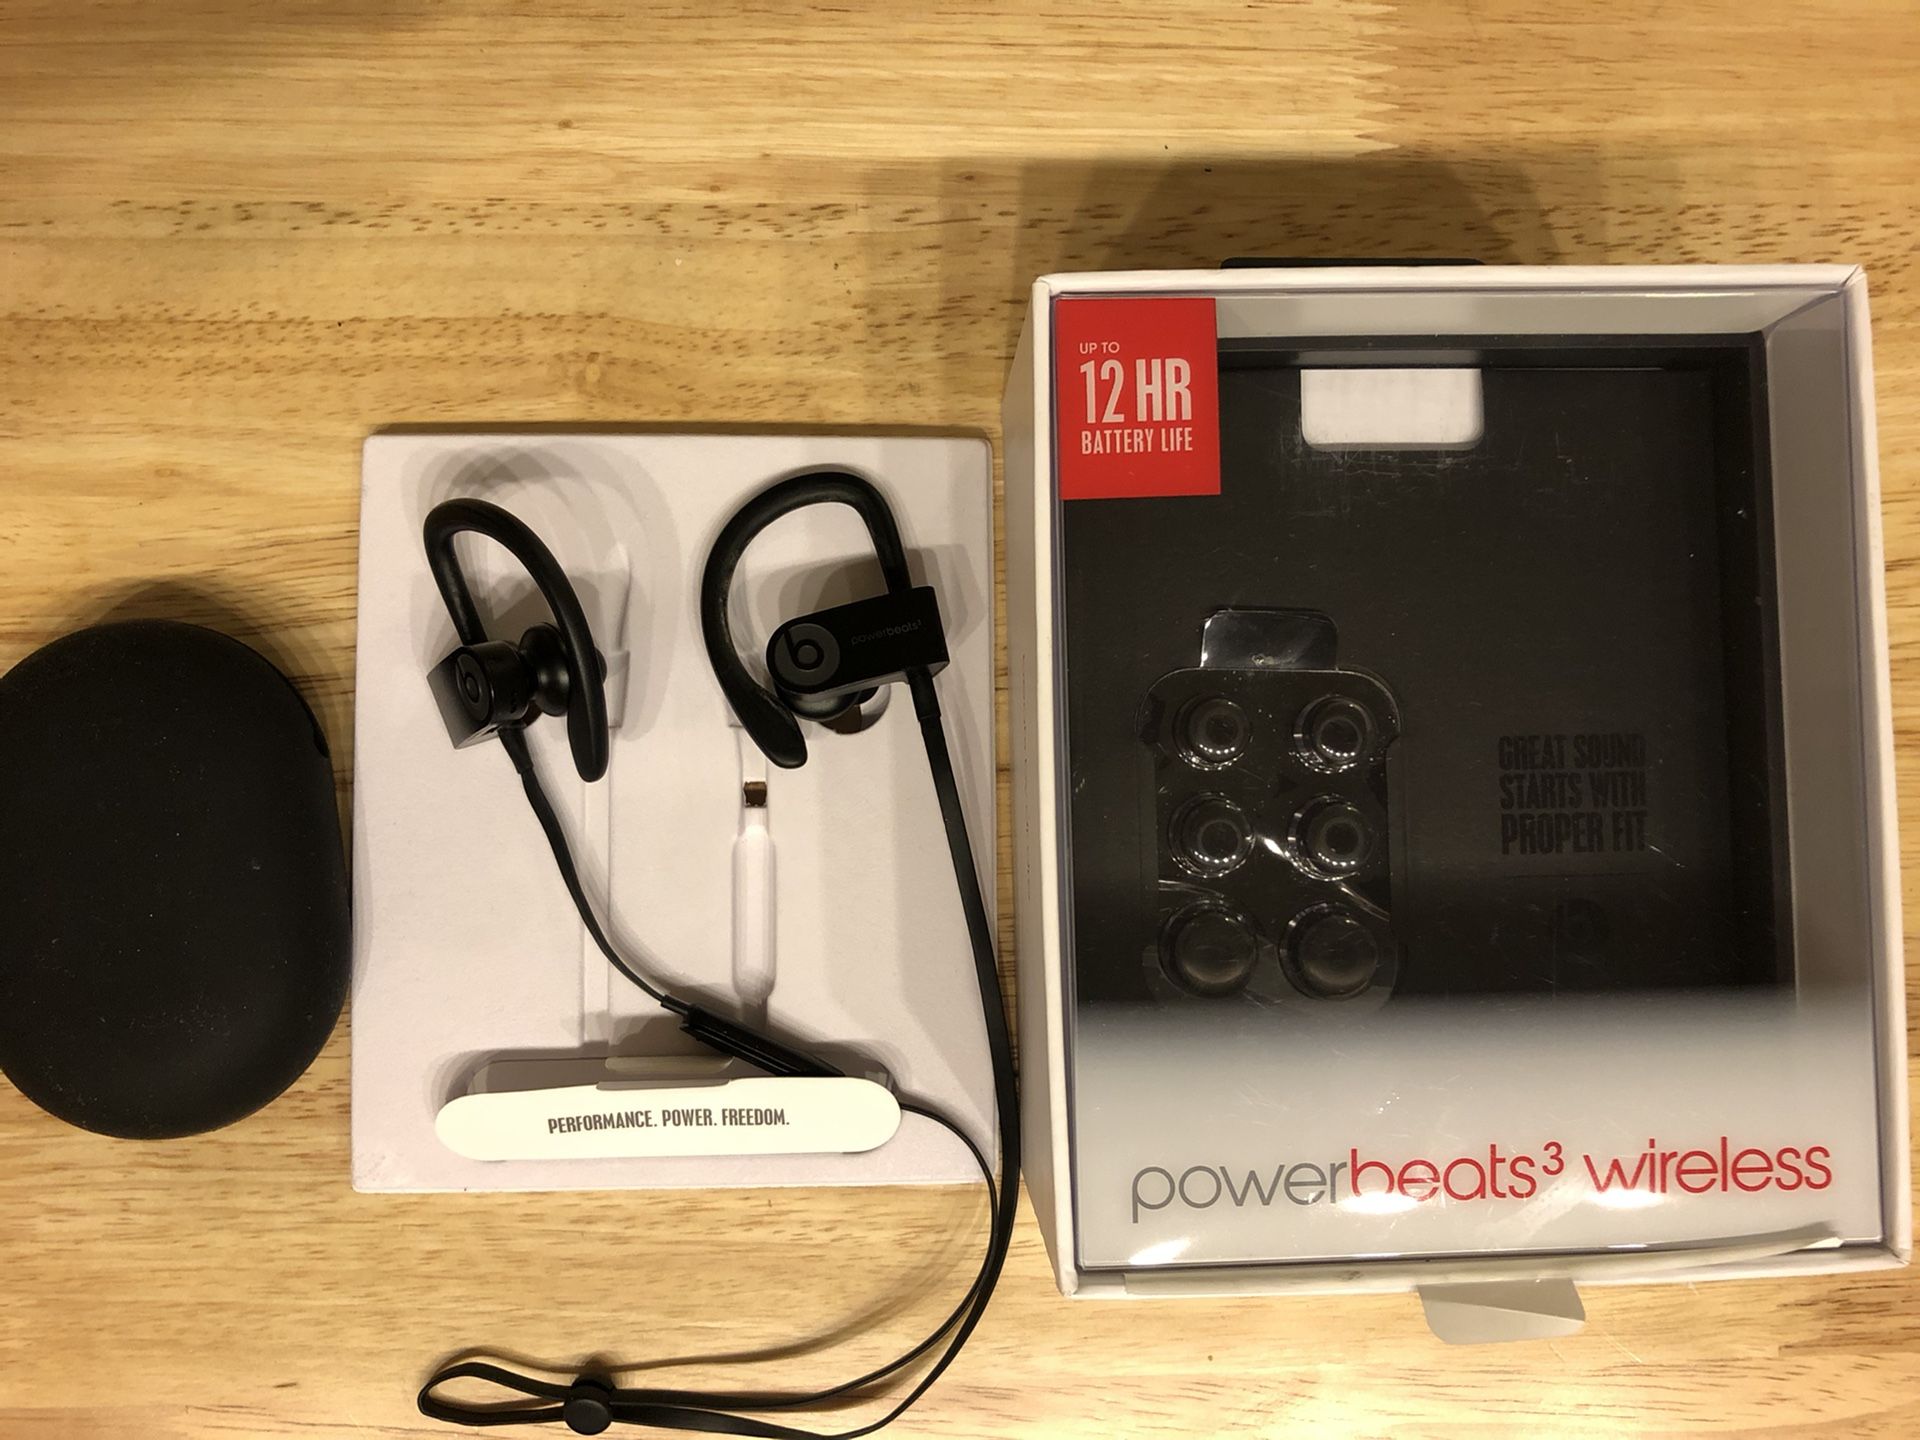 Power beats - wireless earbuds